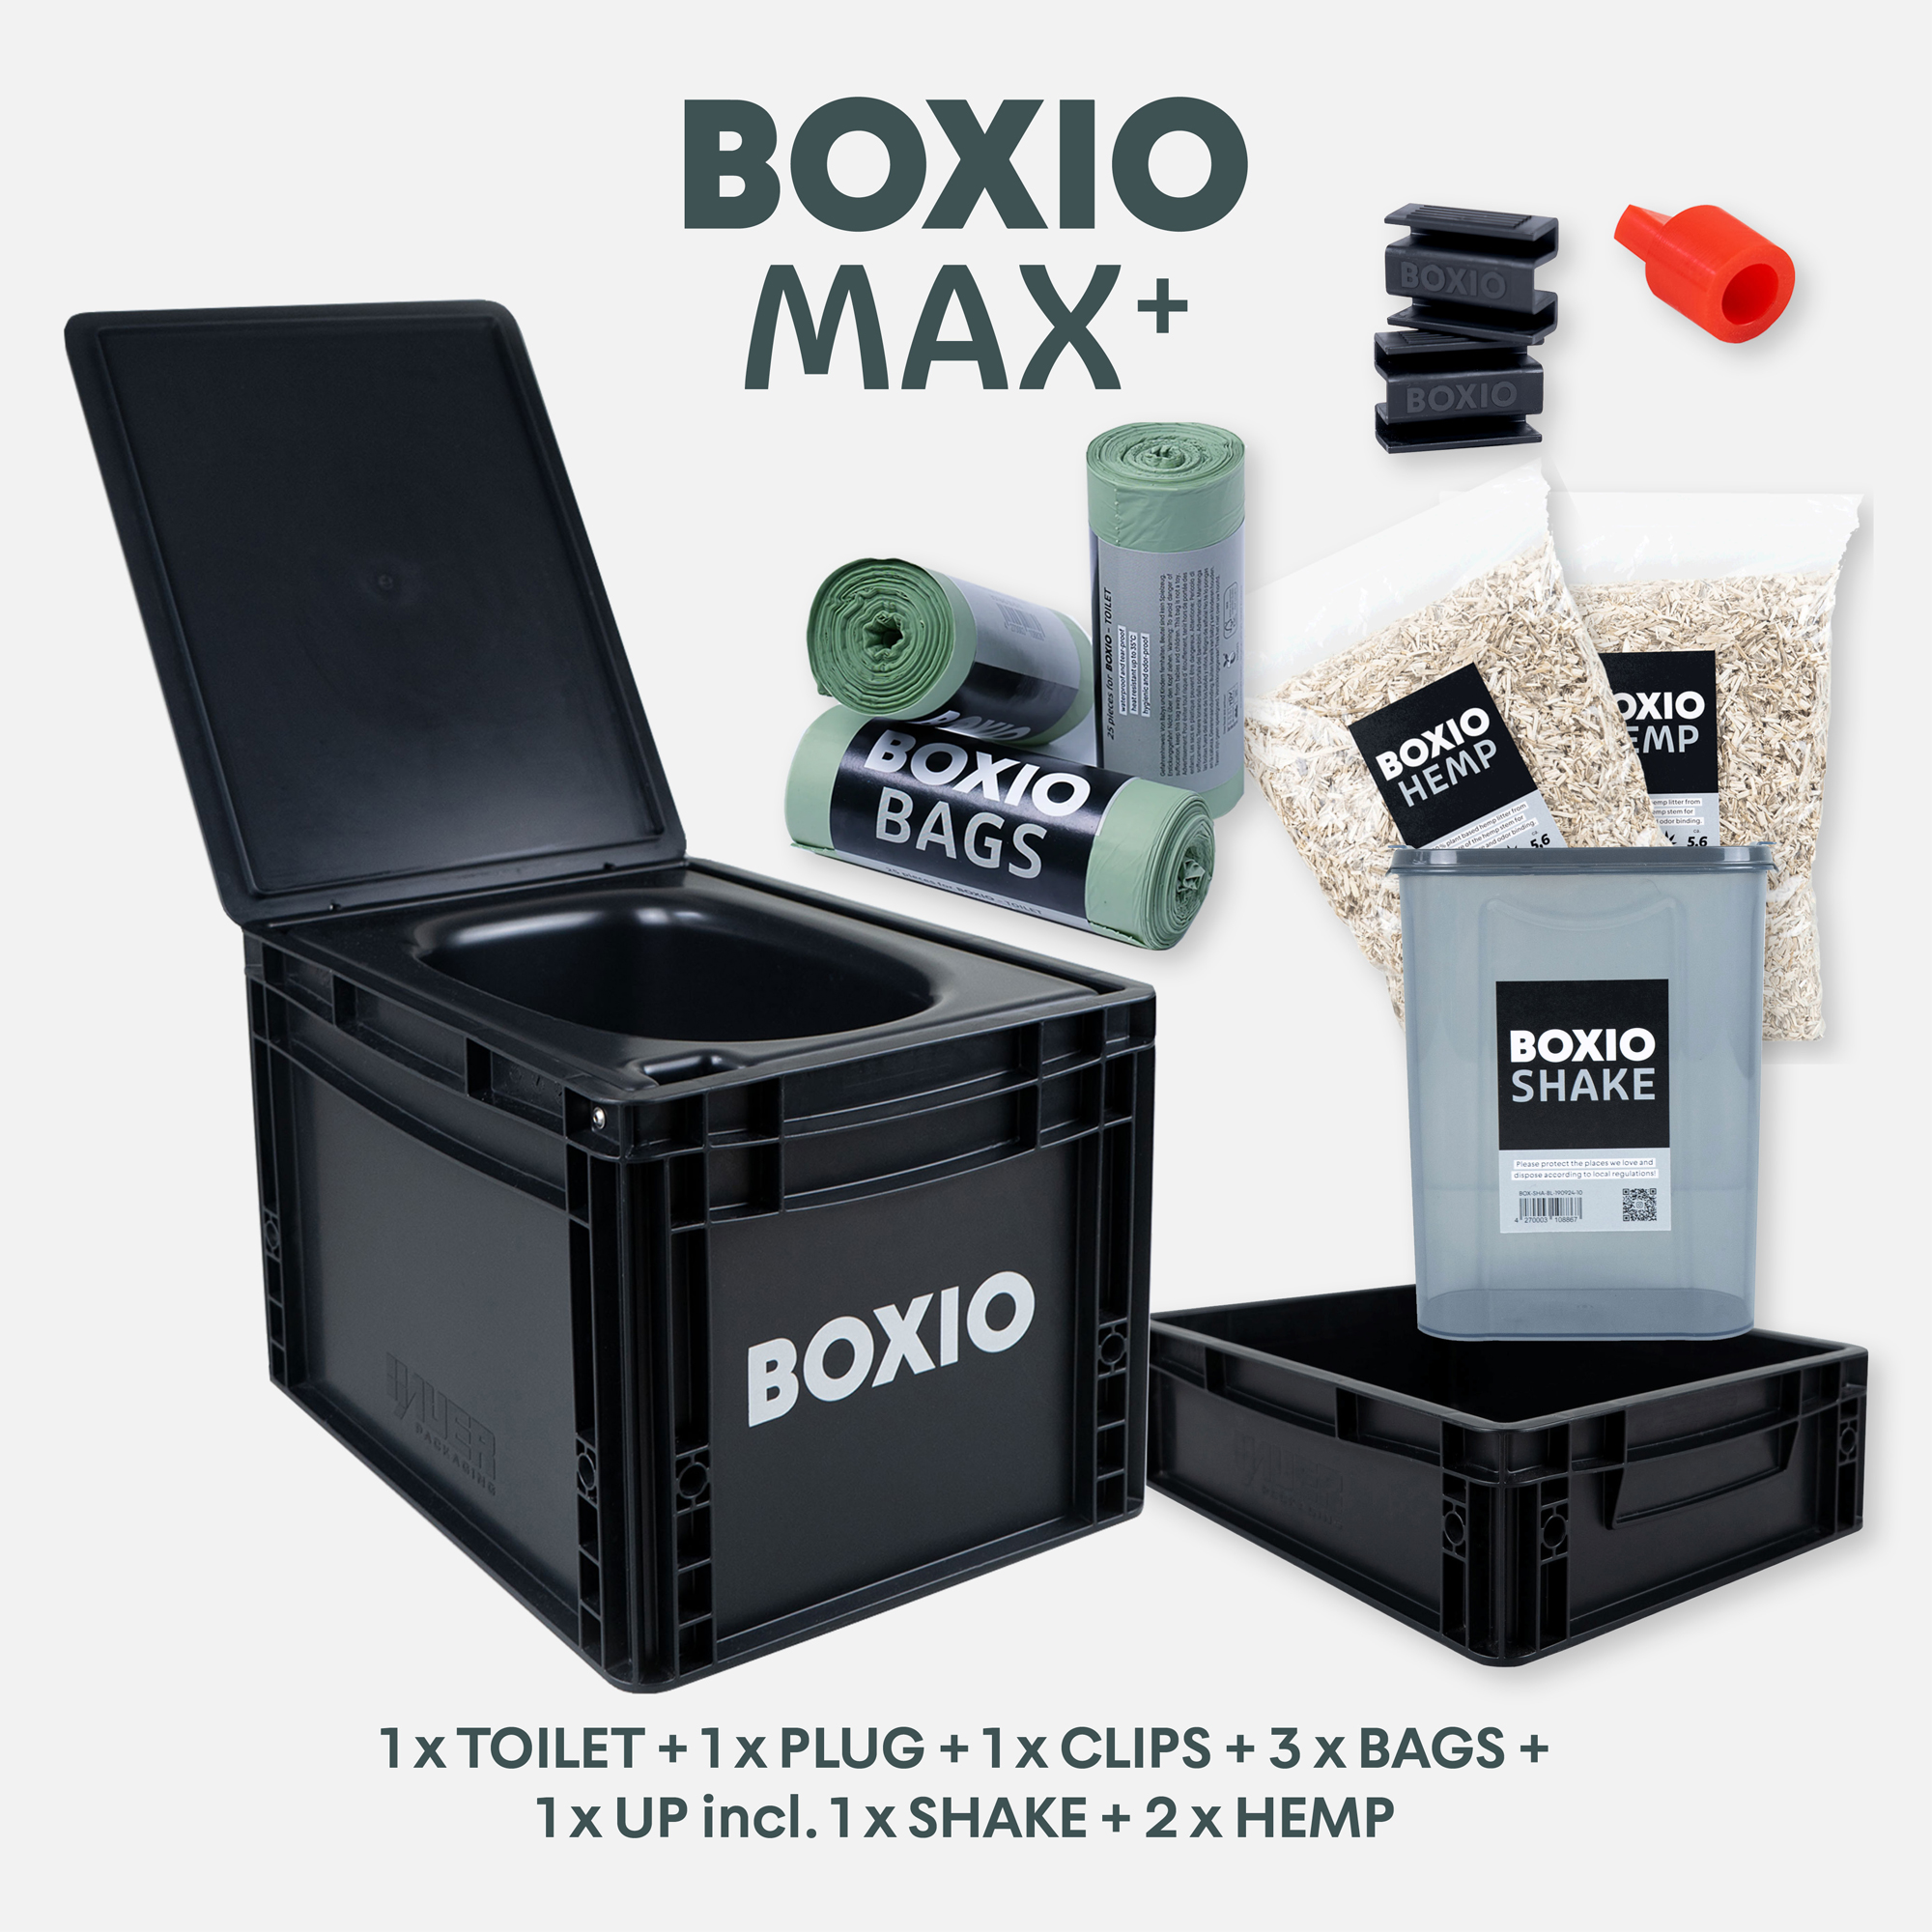 BOXIO TOILET Trenntoilette Komplettset Max+ ideal für den Marco Polo